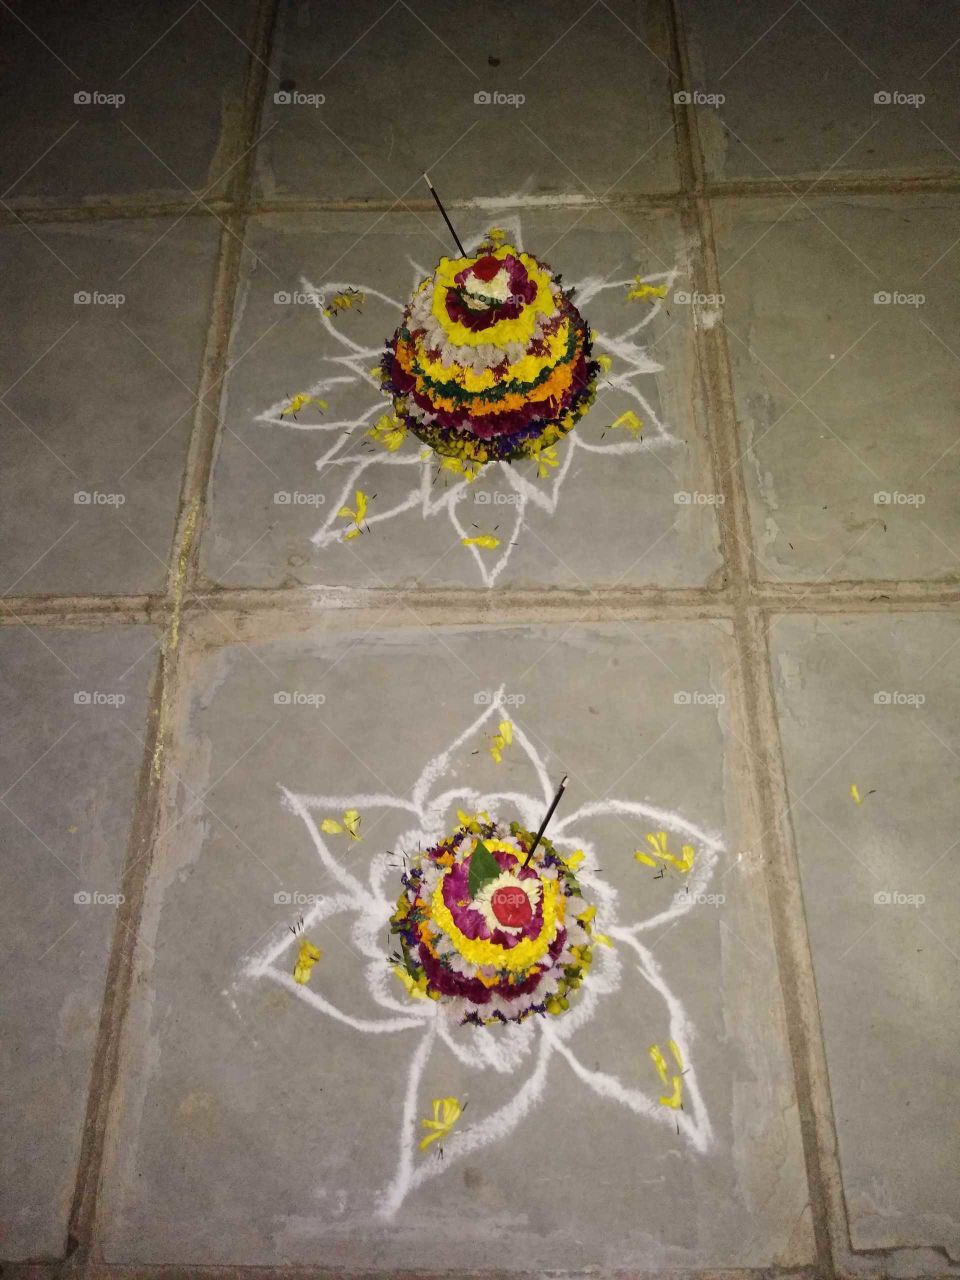 flowers arrangements for the festival called batukamma in telangana india